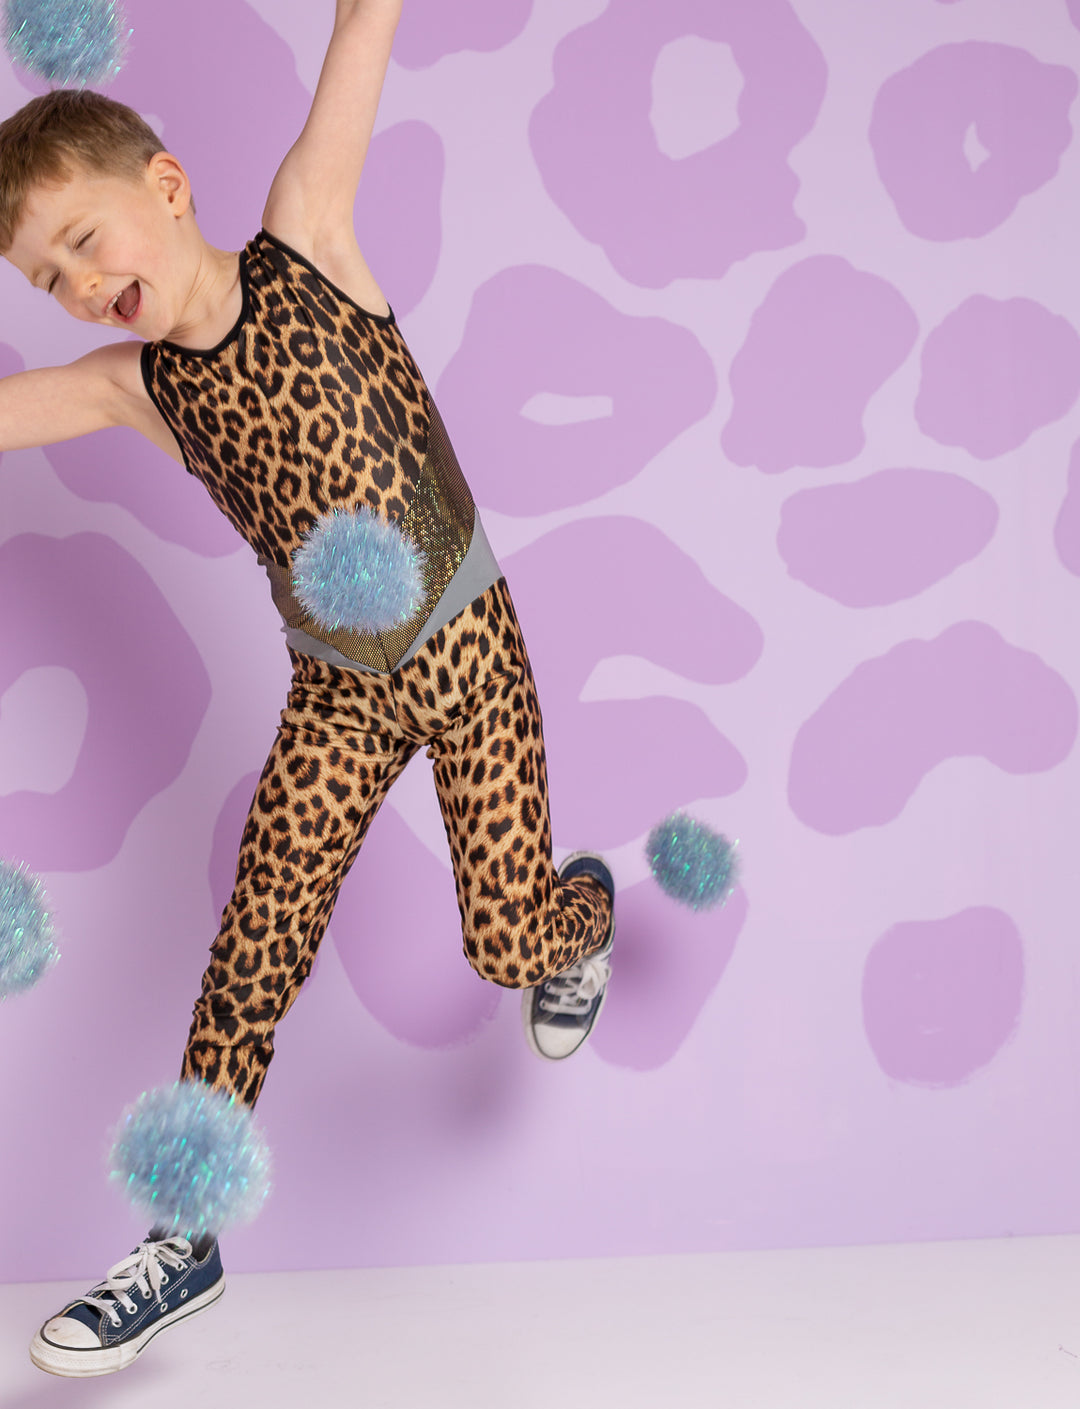 leopard print kids catsuit on boy